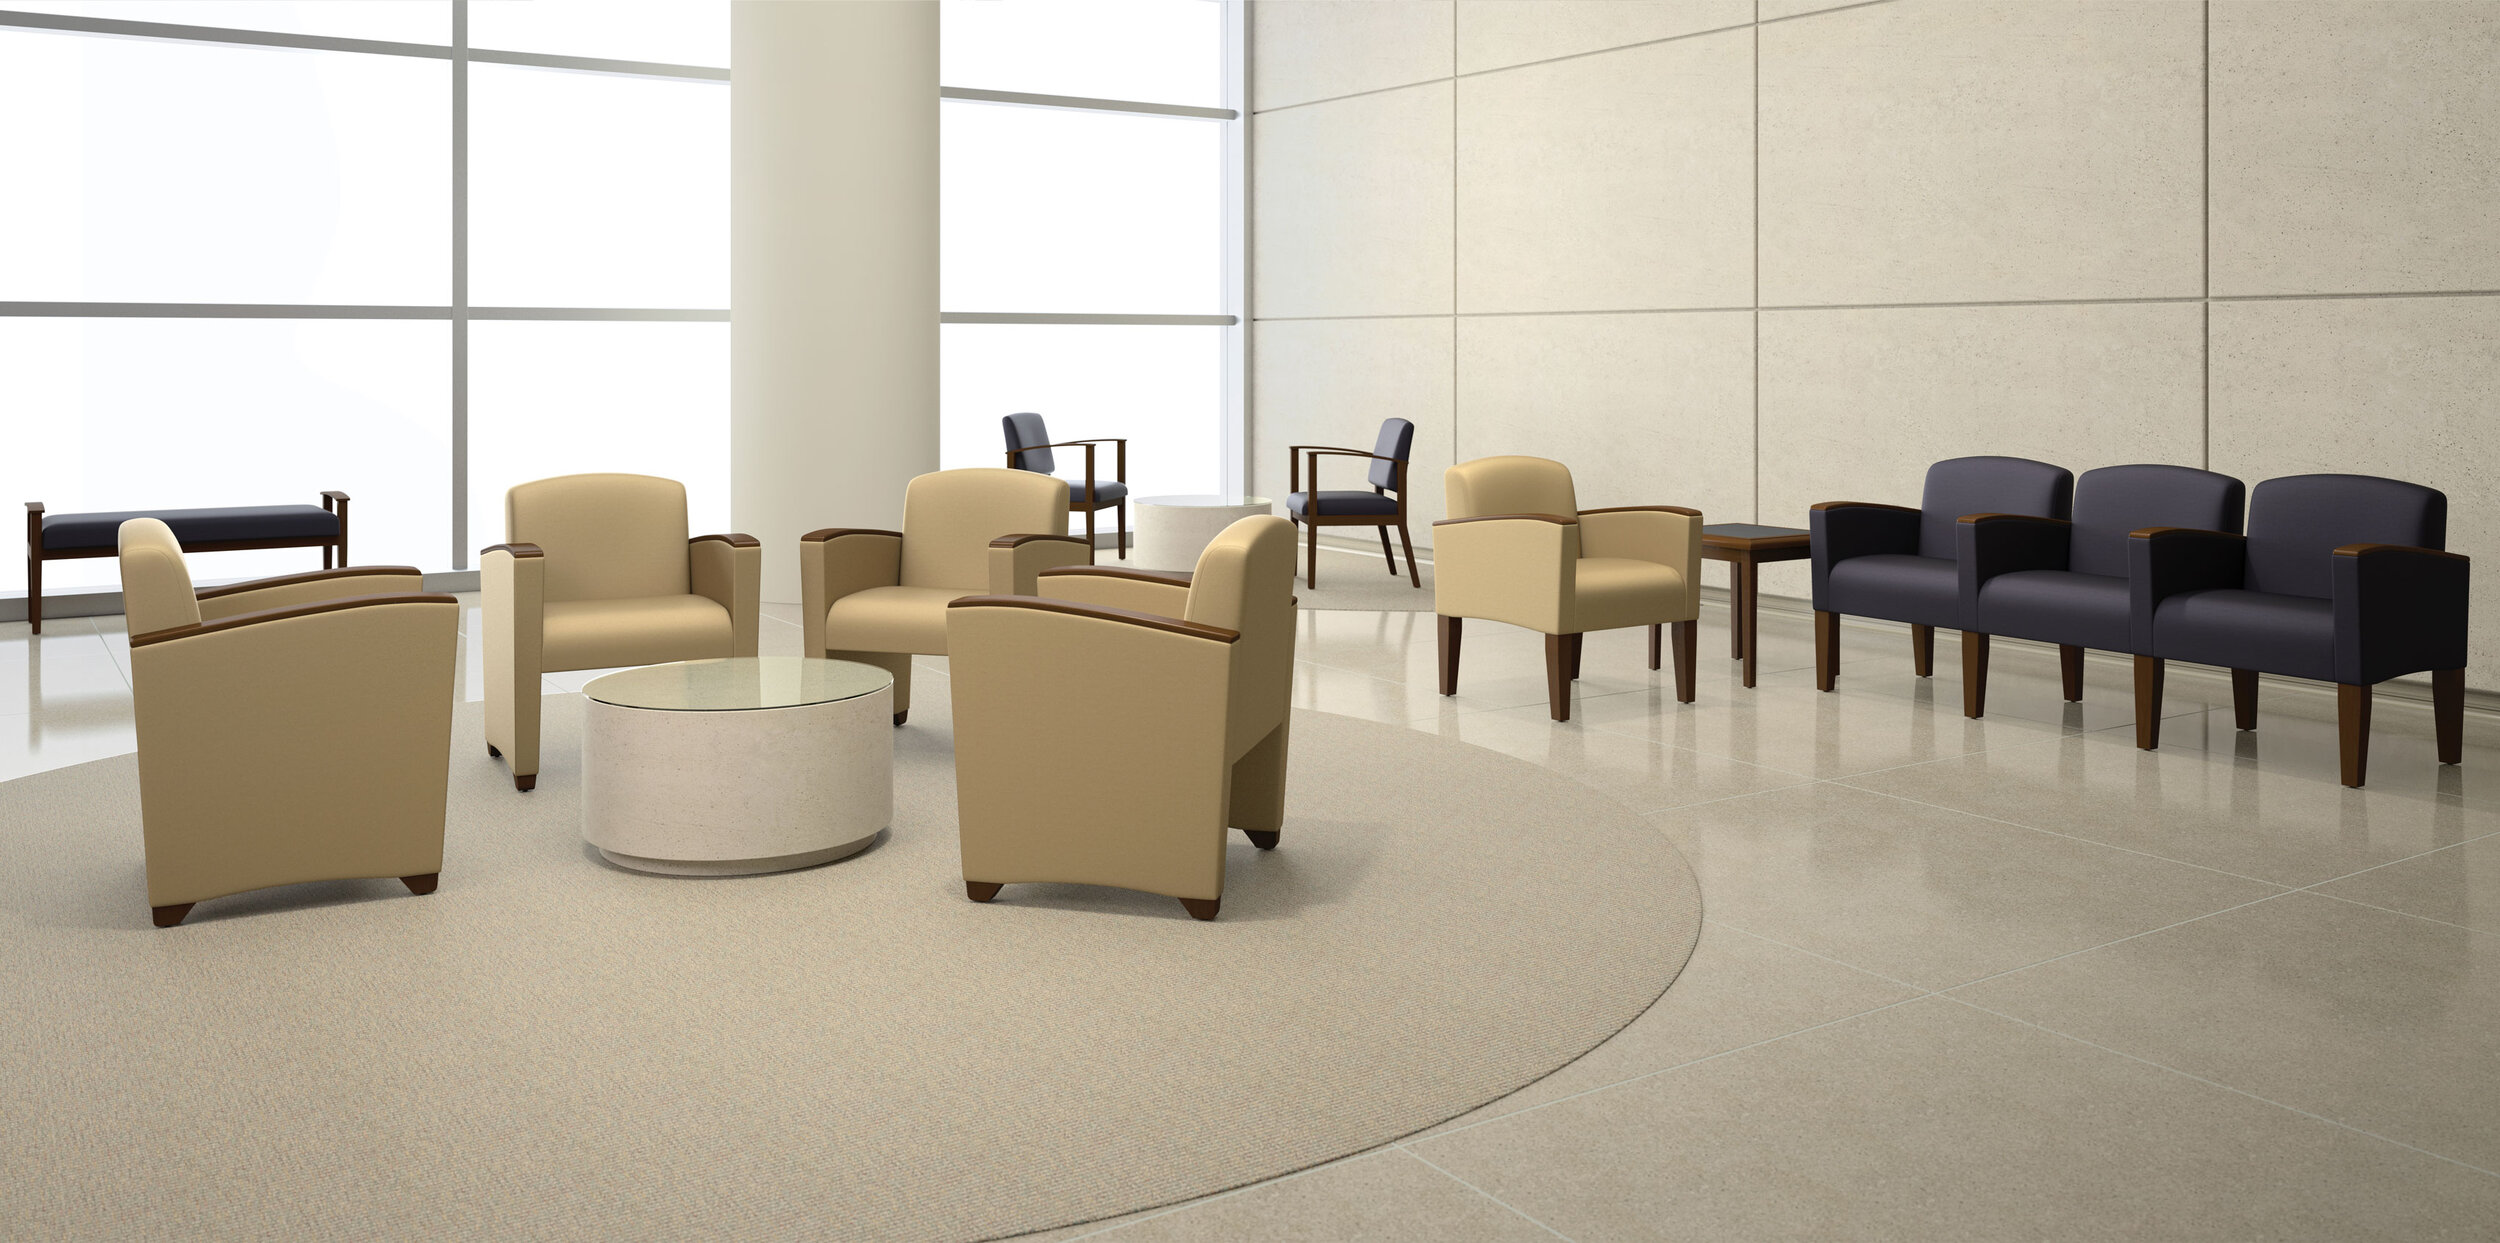 belmont-reception-seating+USA Office Furniture.jpg